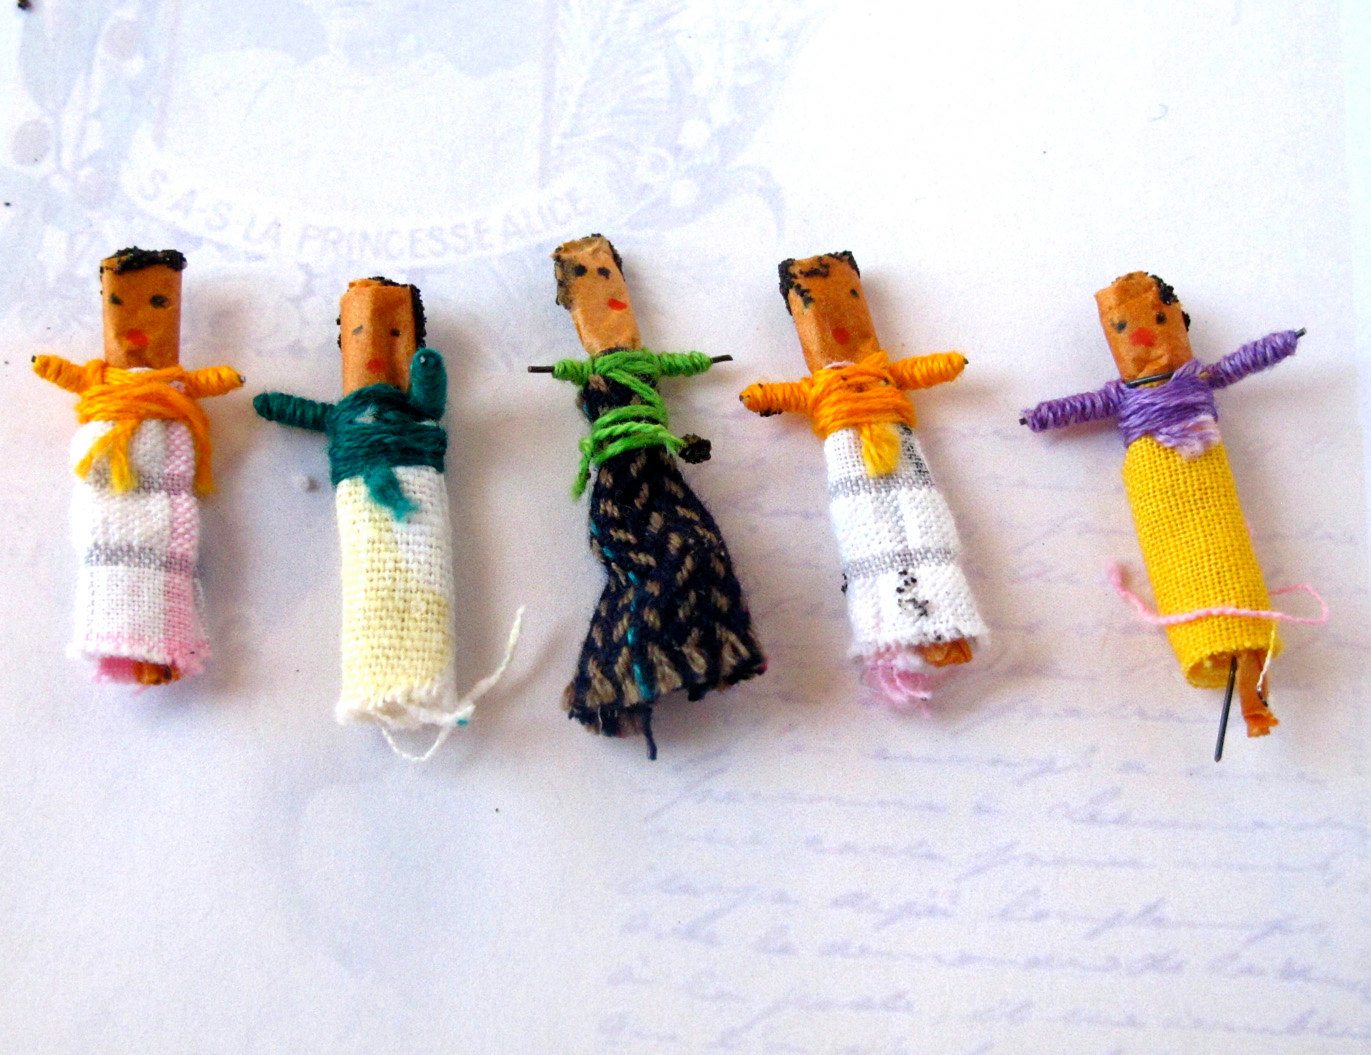 Worry Dolls Handmade Mini Set